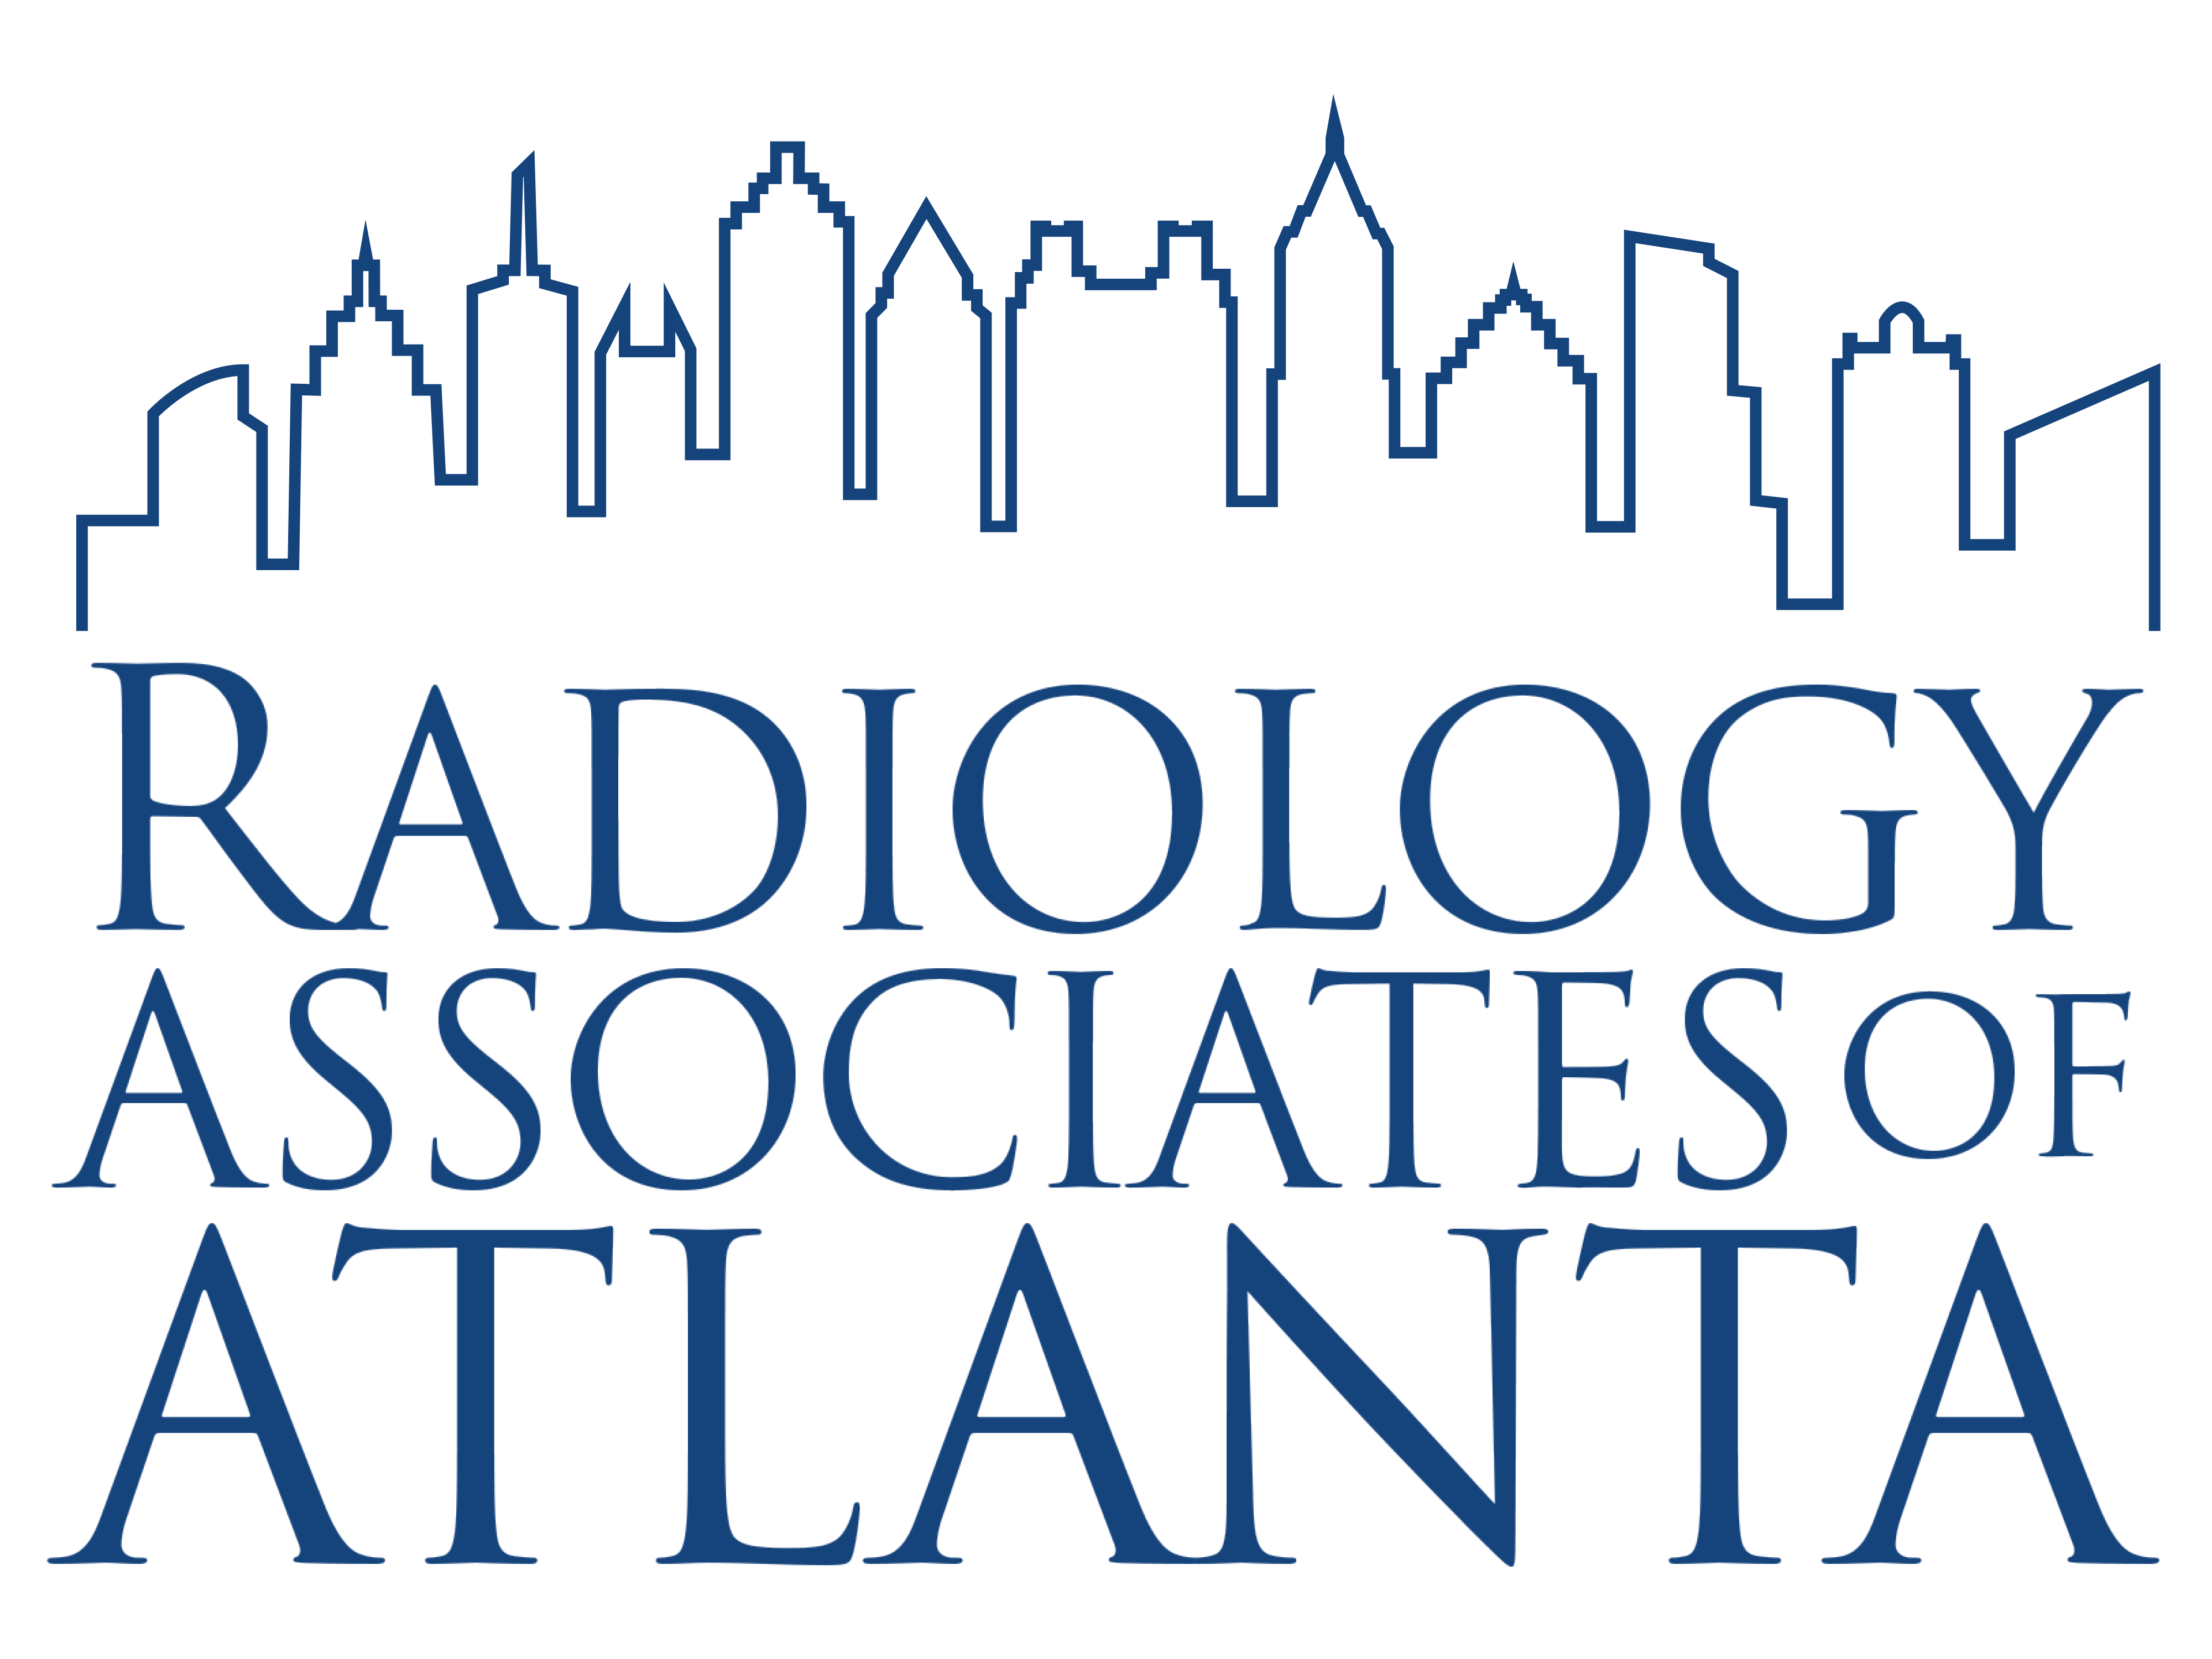 Radiology Associates of Atlanta